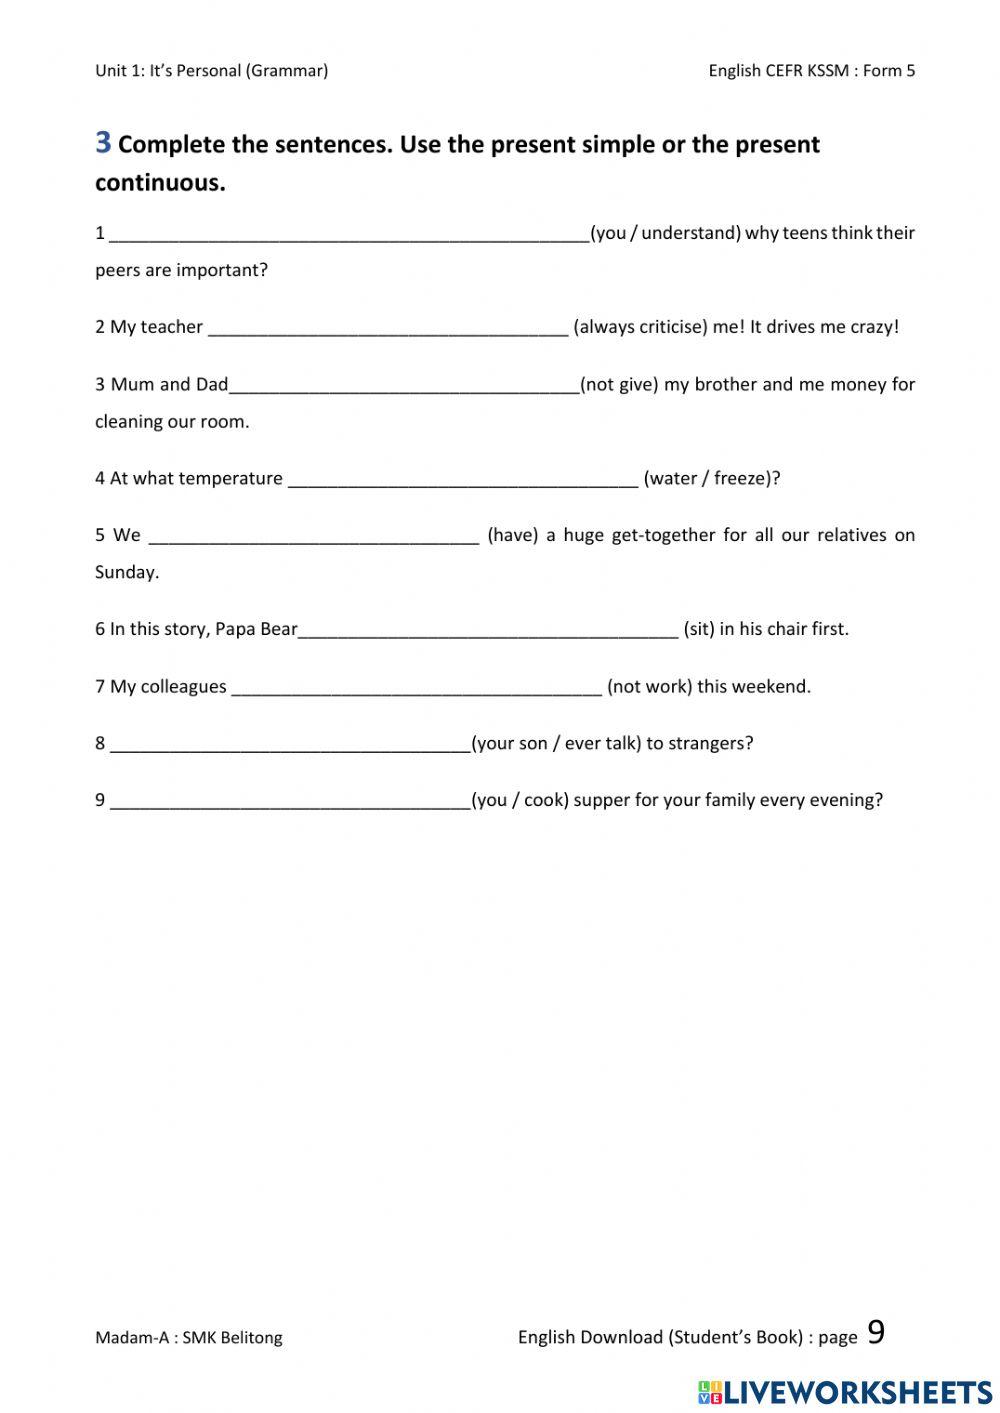 English CEFR Form 5 Unit 1: Page 9 (Grammar)